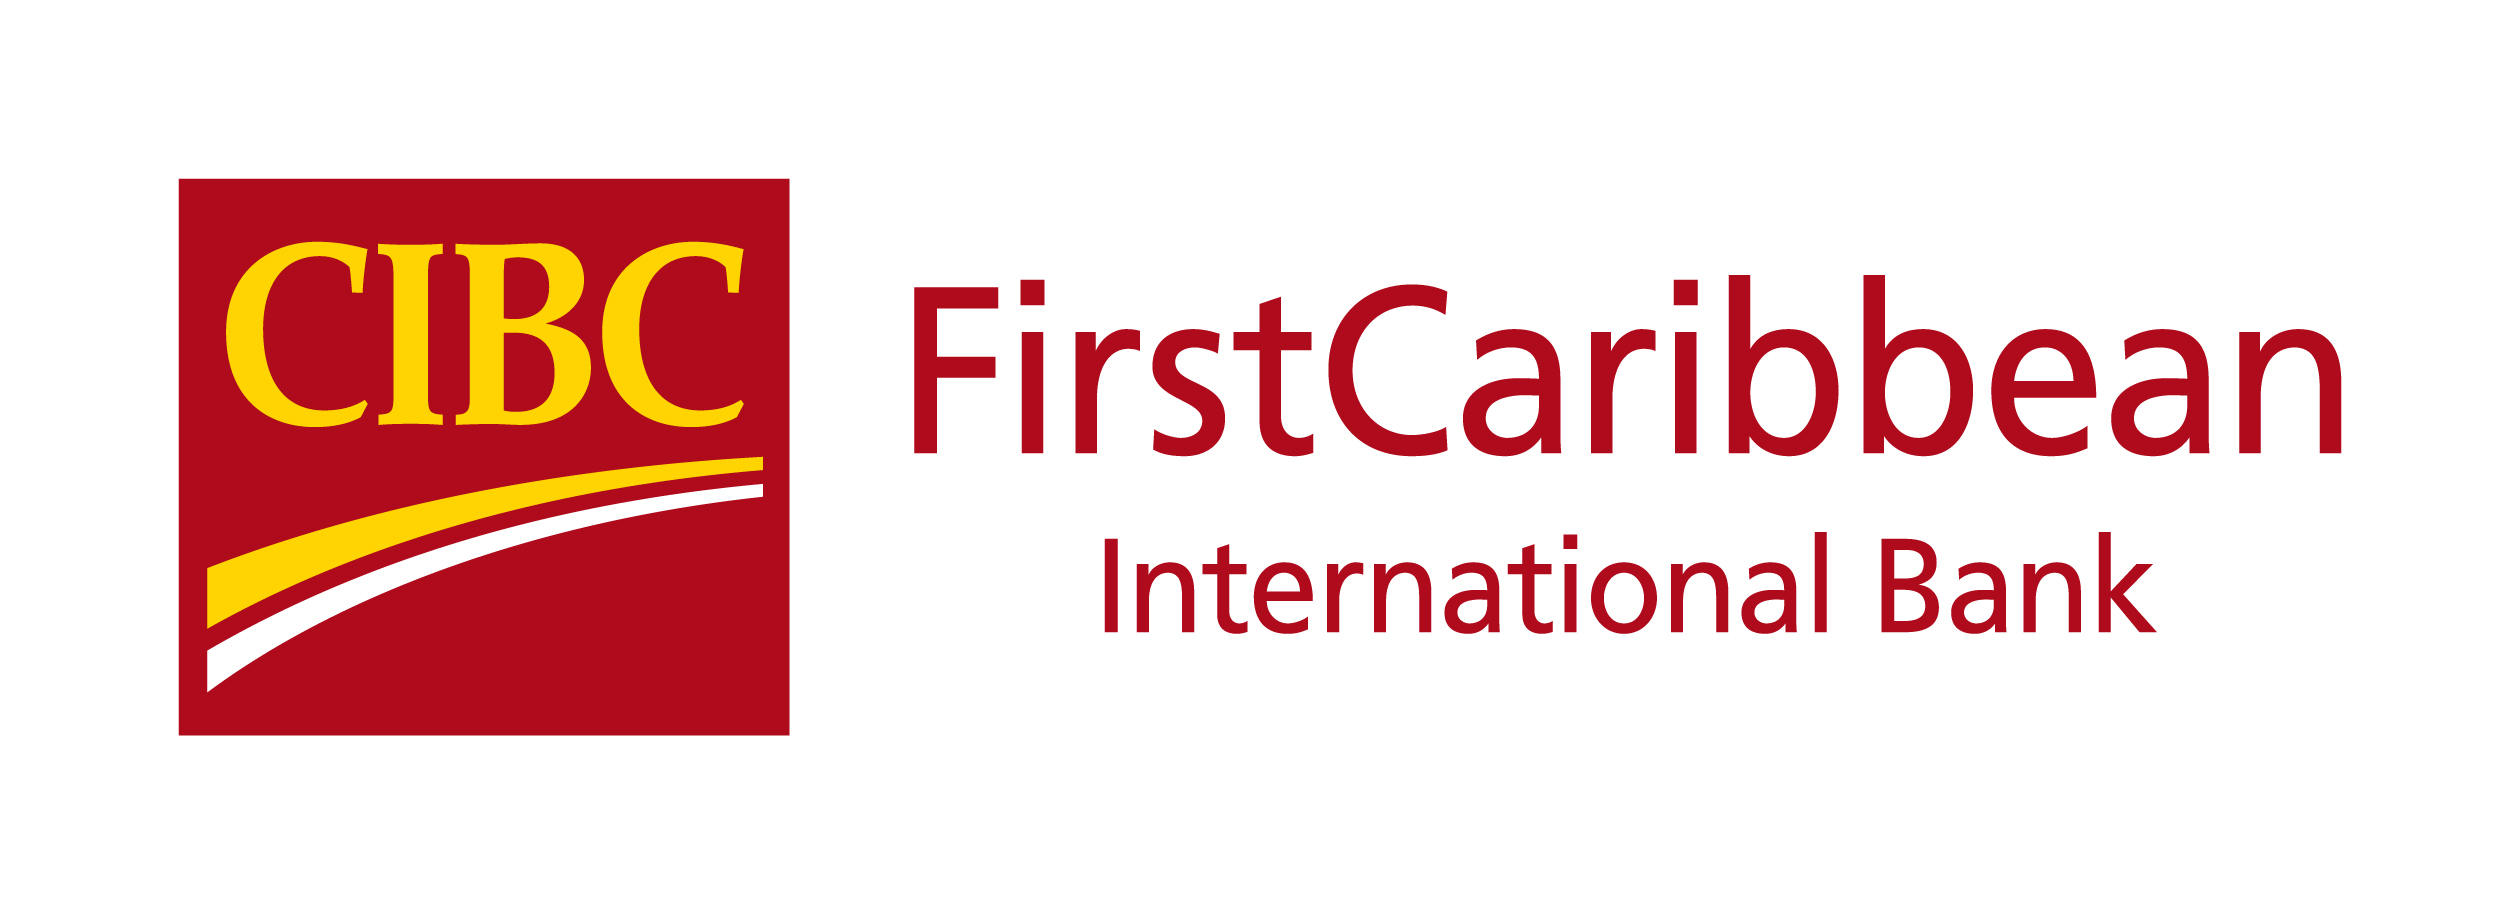 CIBC-FirstCaribbean International Bank